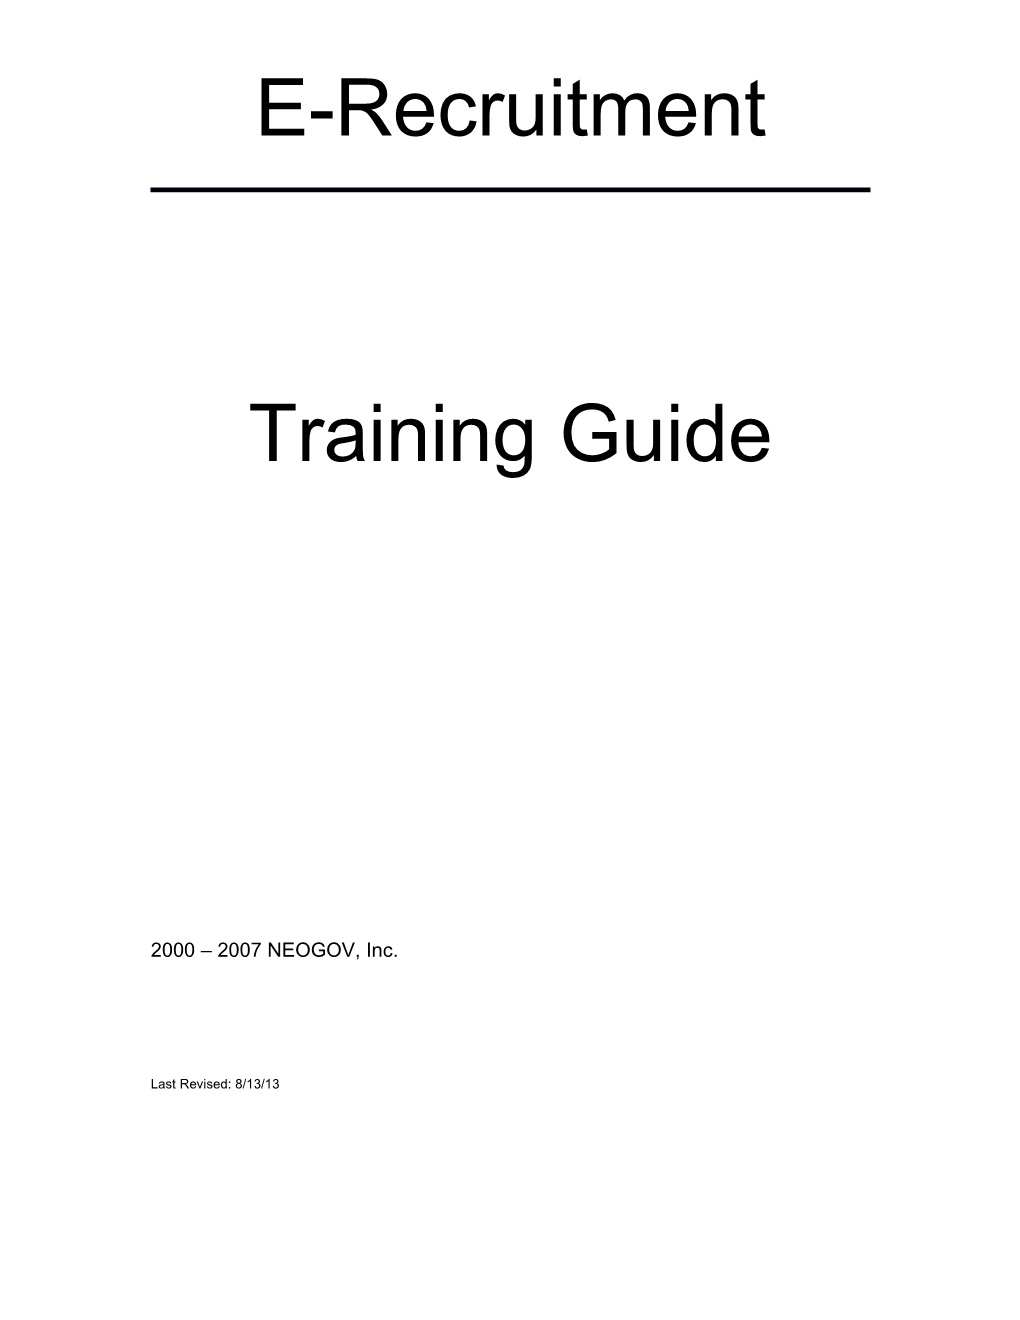 Insight Enterprise Training Guidepage 1